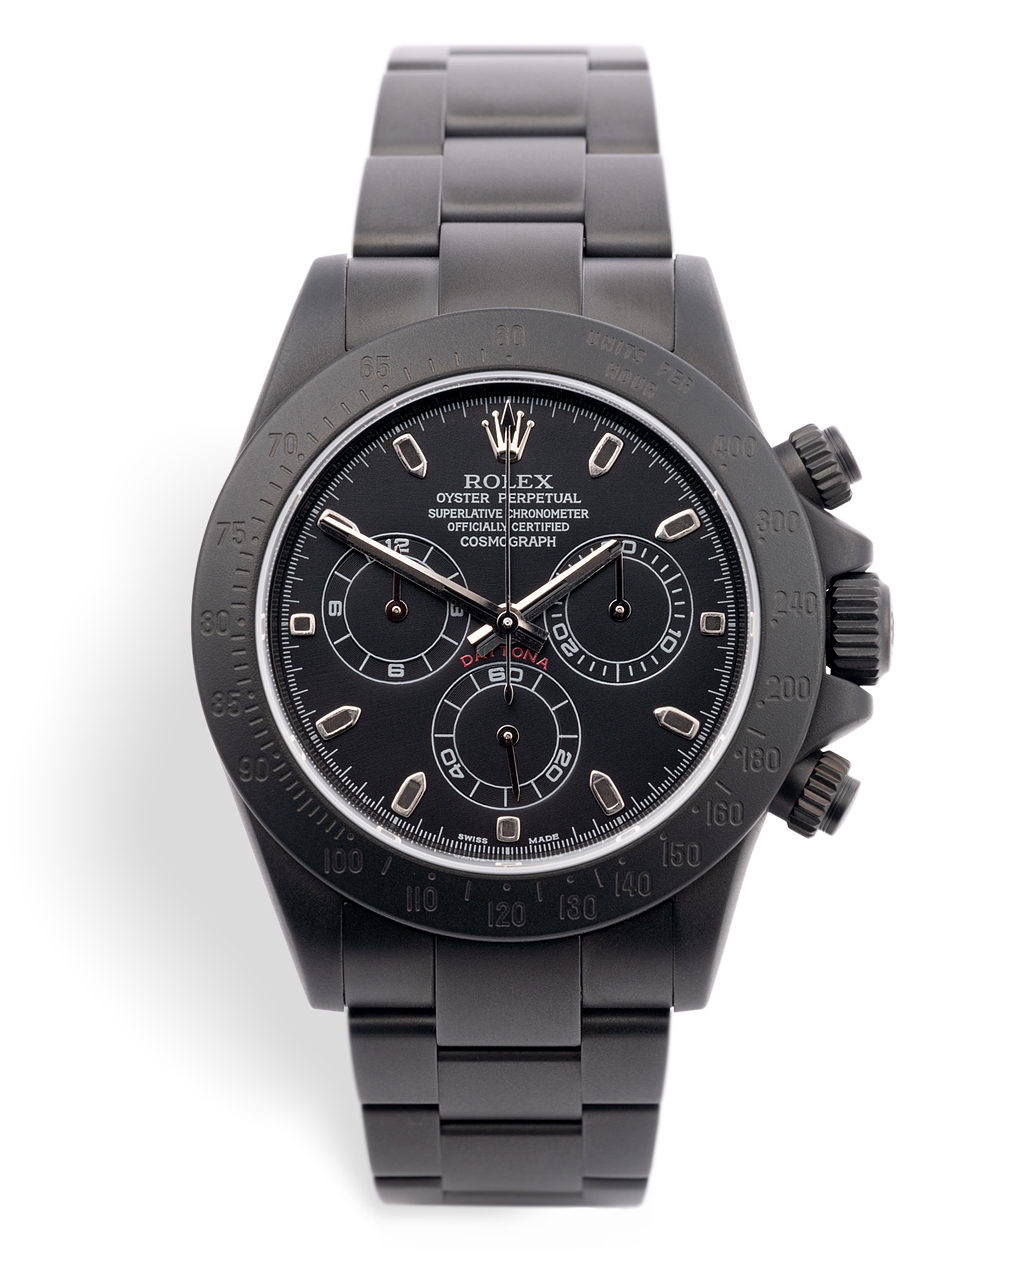 Pro Hunter Cosmograph Daytona Phantom Watches | ref 116520 | One of 100 ...